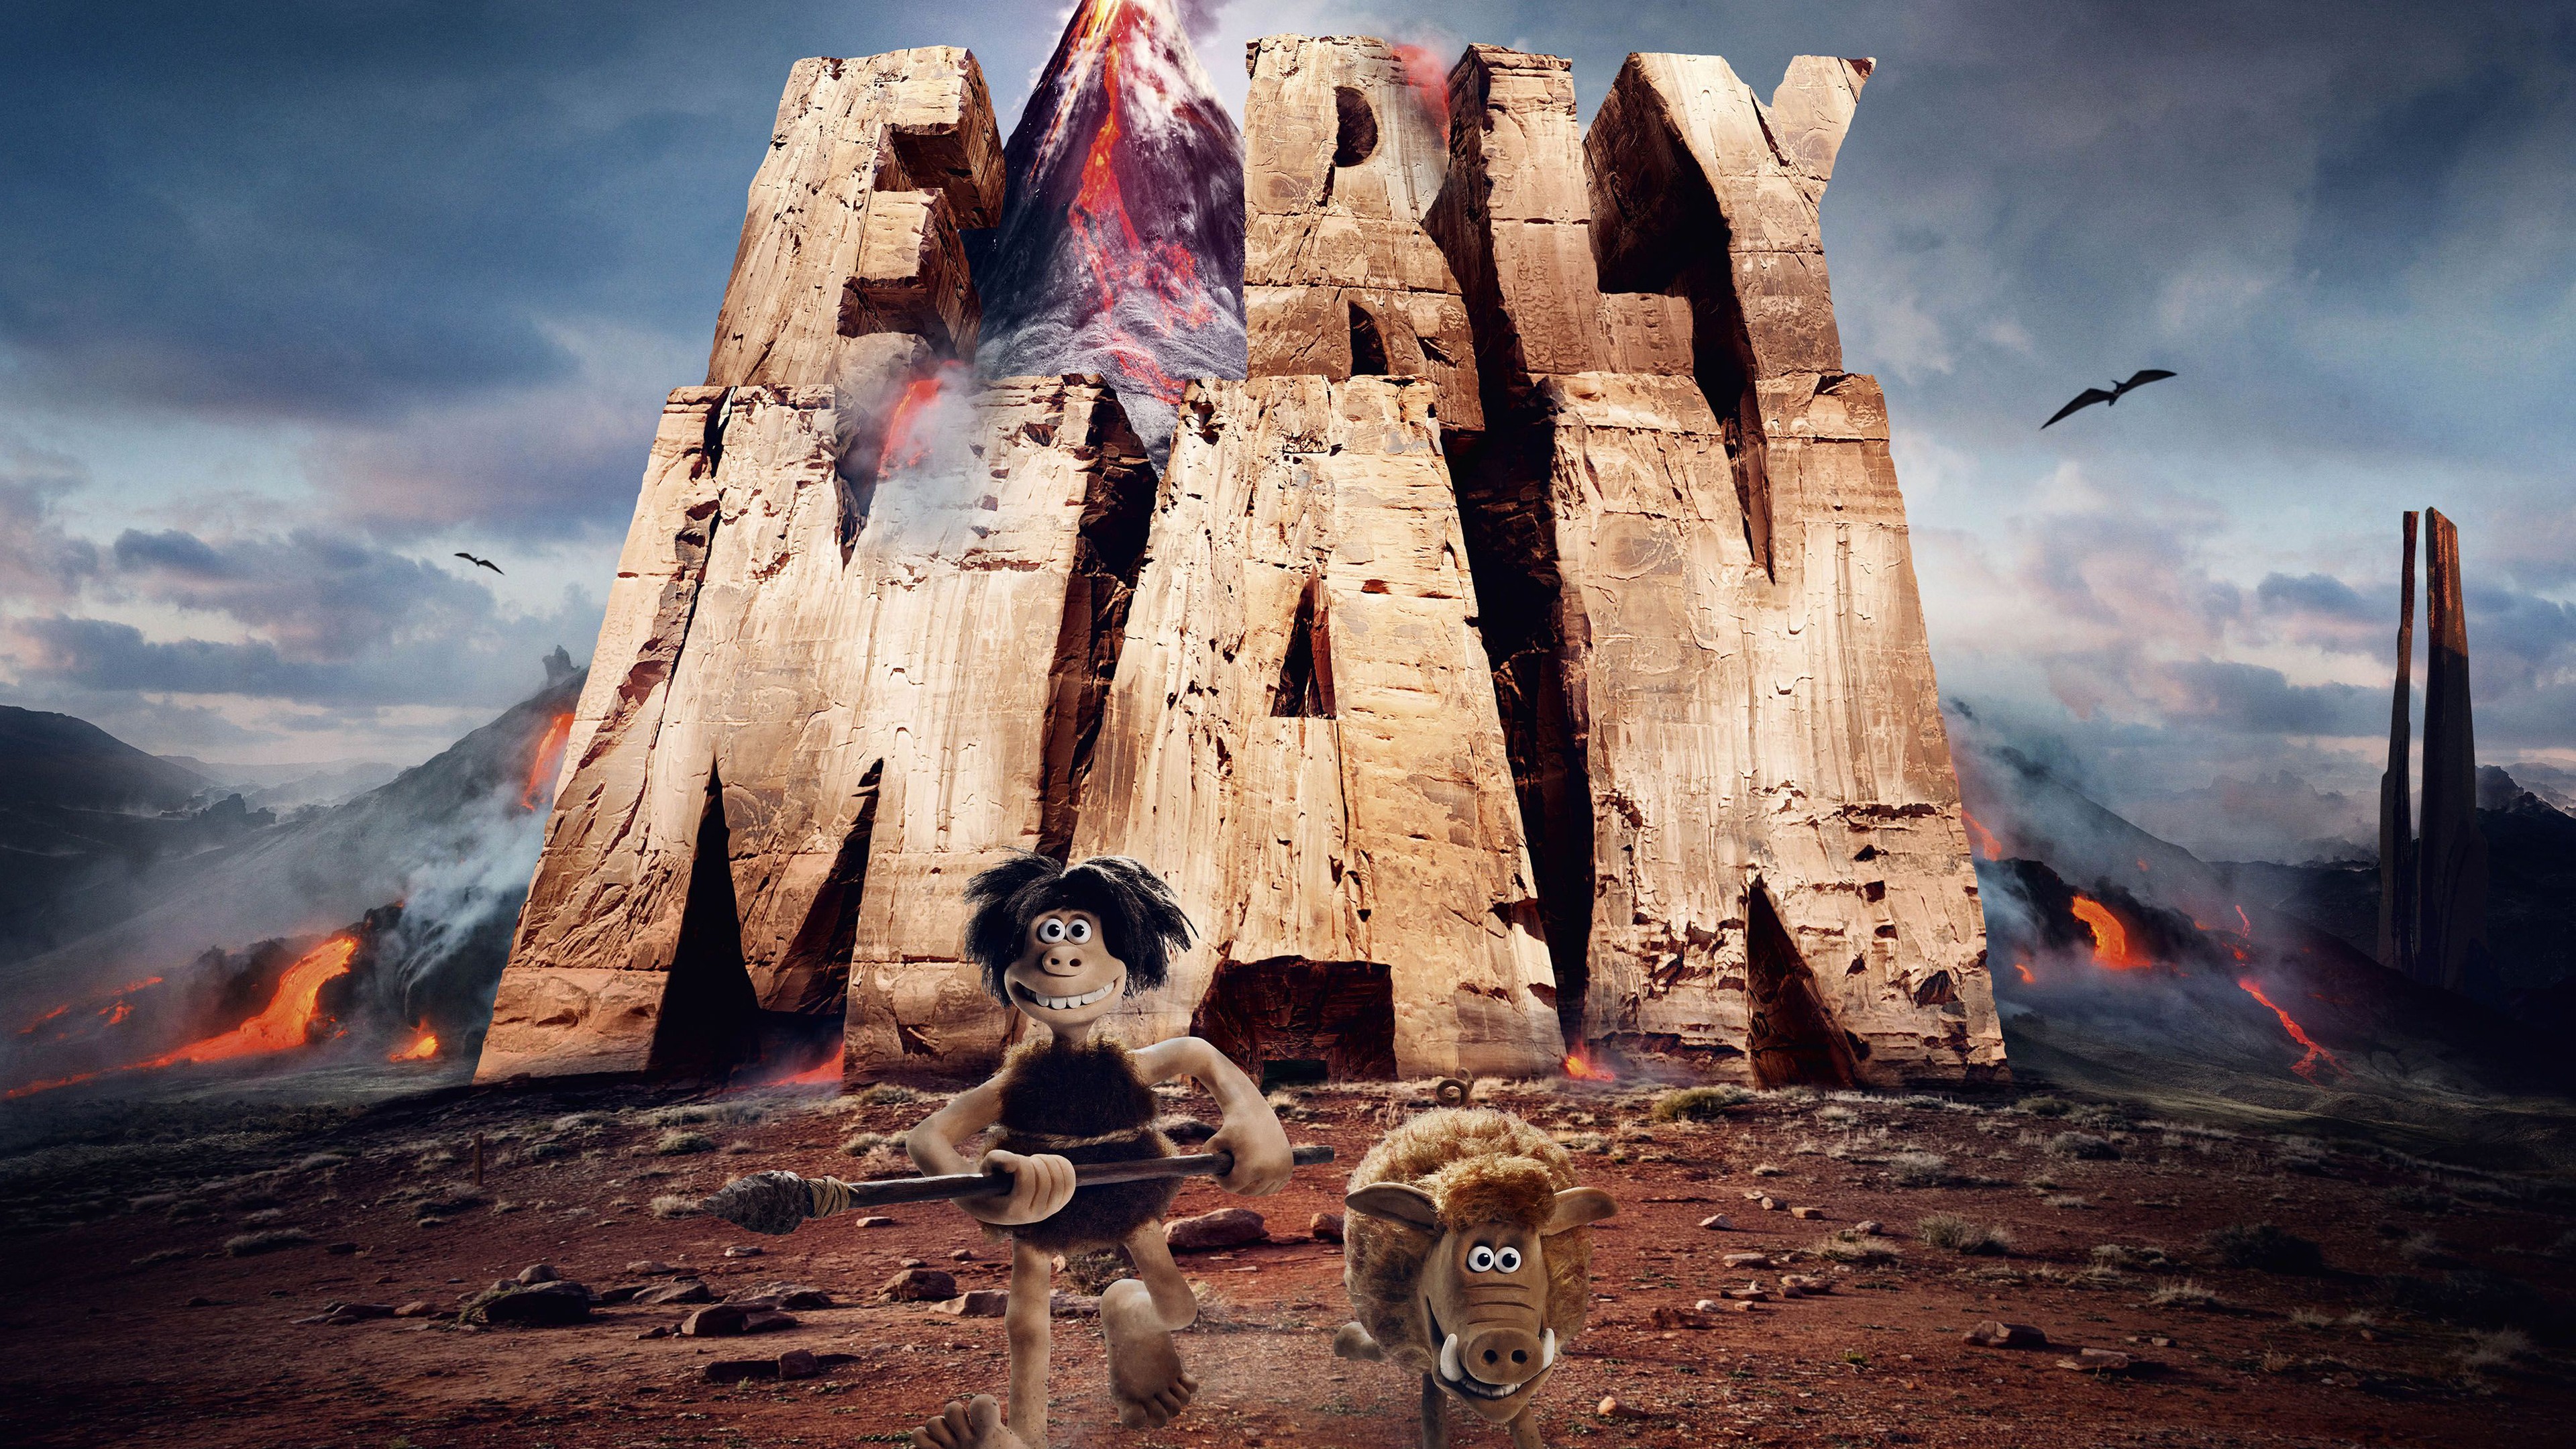 early man 2018 4k 1536401970 - Early Man 2018 4k - hd-wallpapers, early man wallpapers, animated movies wallpapers, 4k-wallpapers, 2018-movies-wallpapers